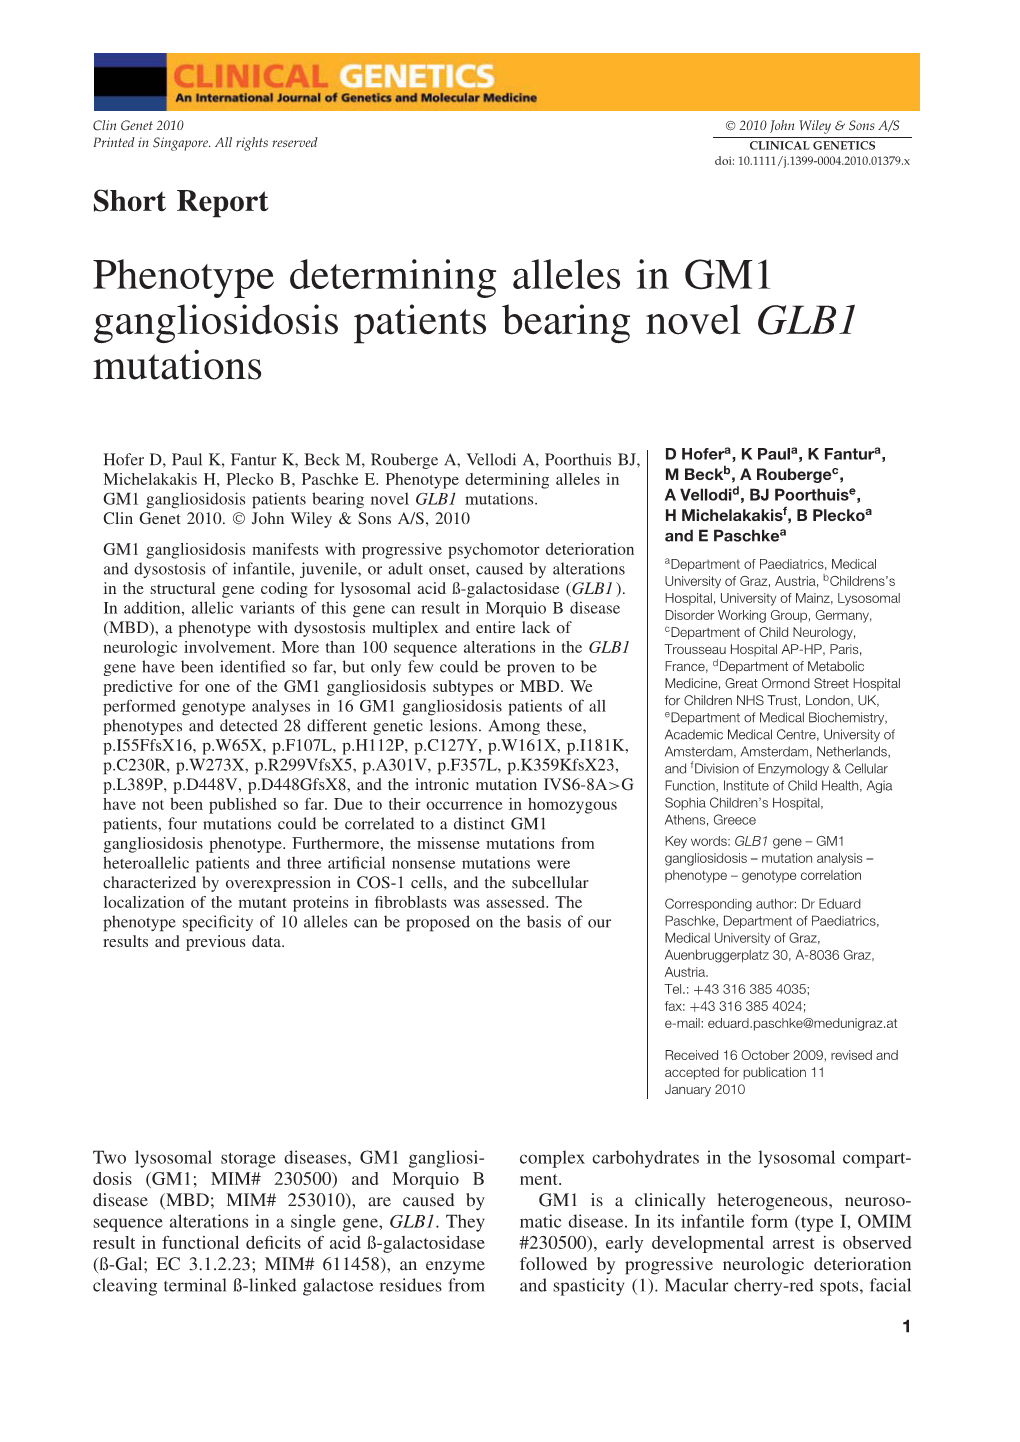 Phenotype Determining Alleles in GM1 Gangliosidosis Patients Bearing Novel GLB1 Mutations